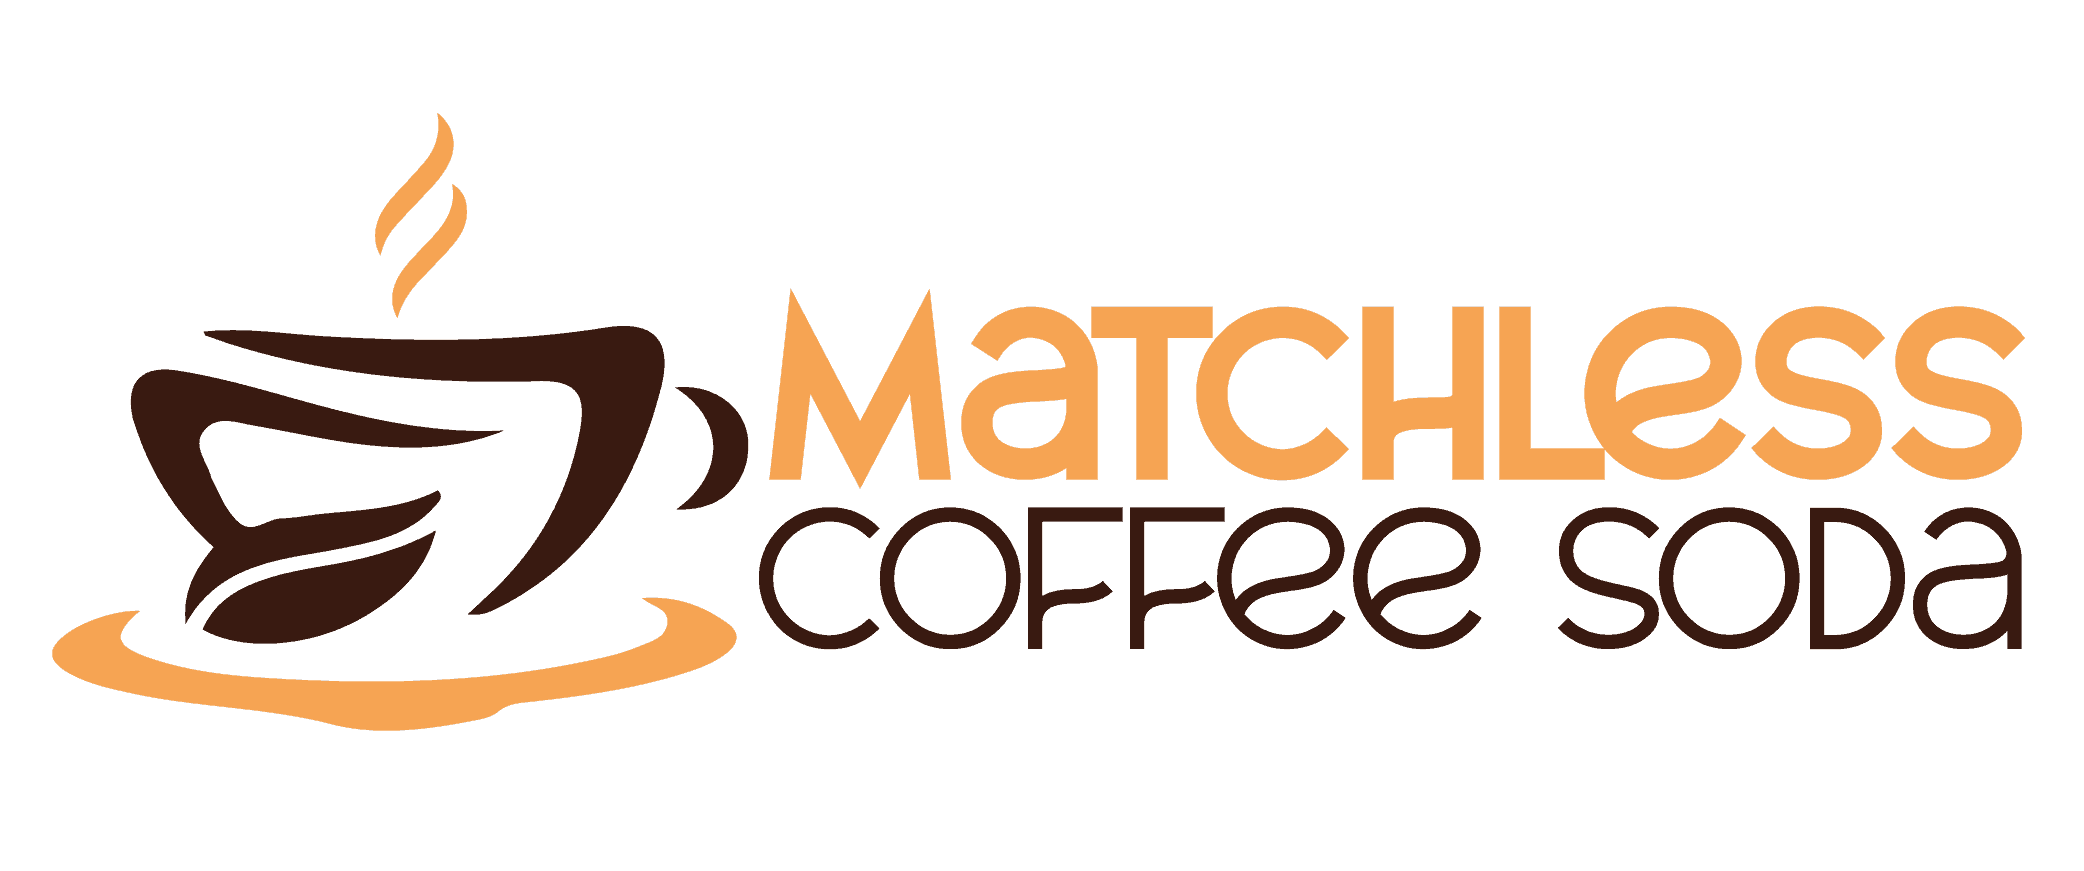 Matchless Cofee Soda Logo